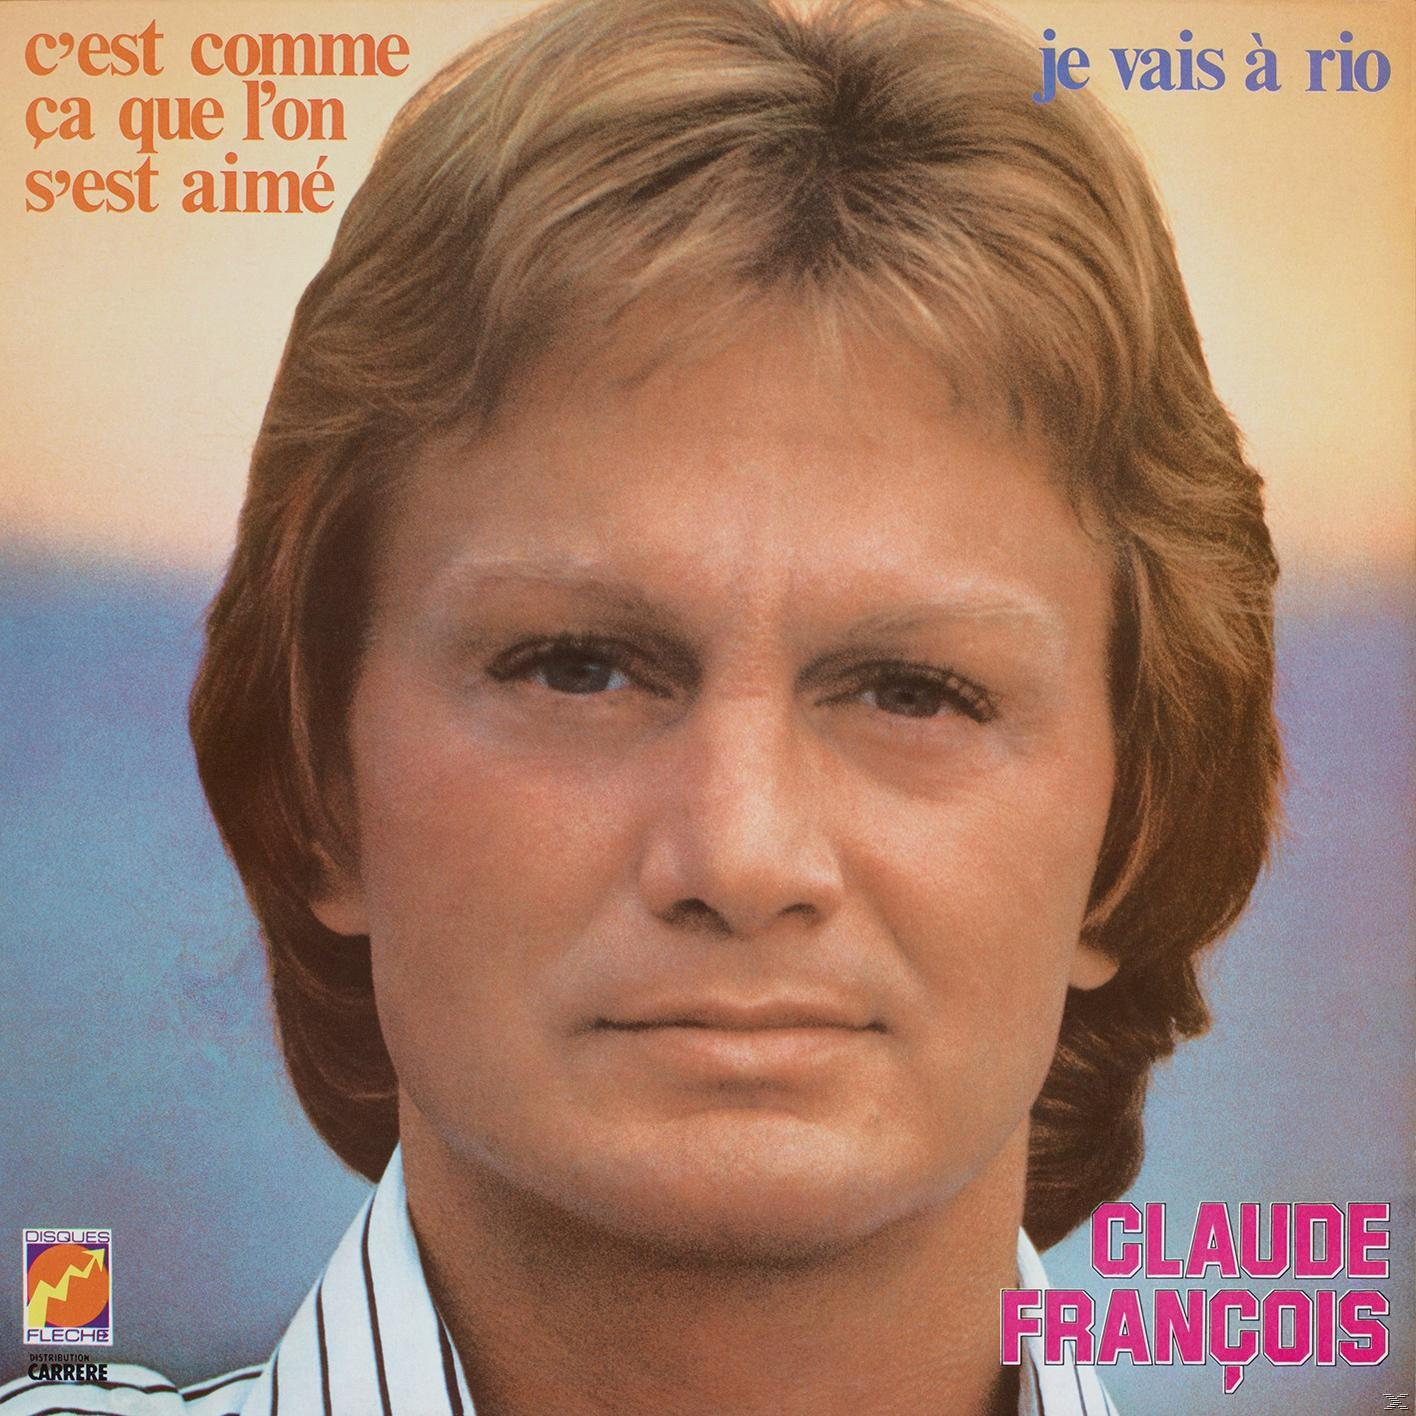 - A (CD) Vais Claude - Rio Francois Je